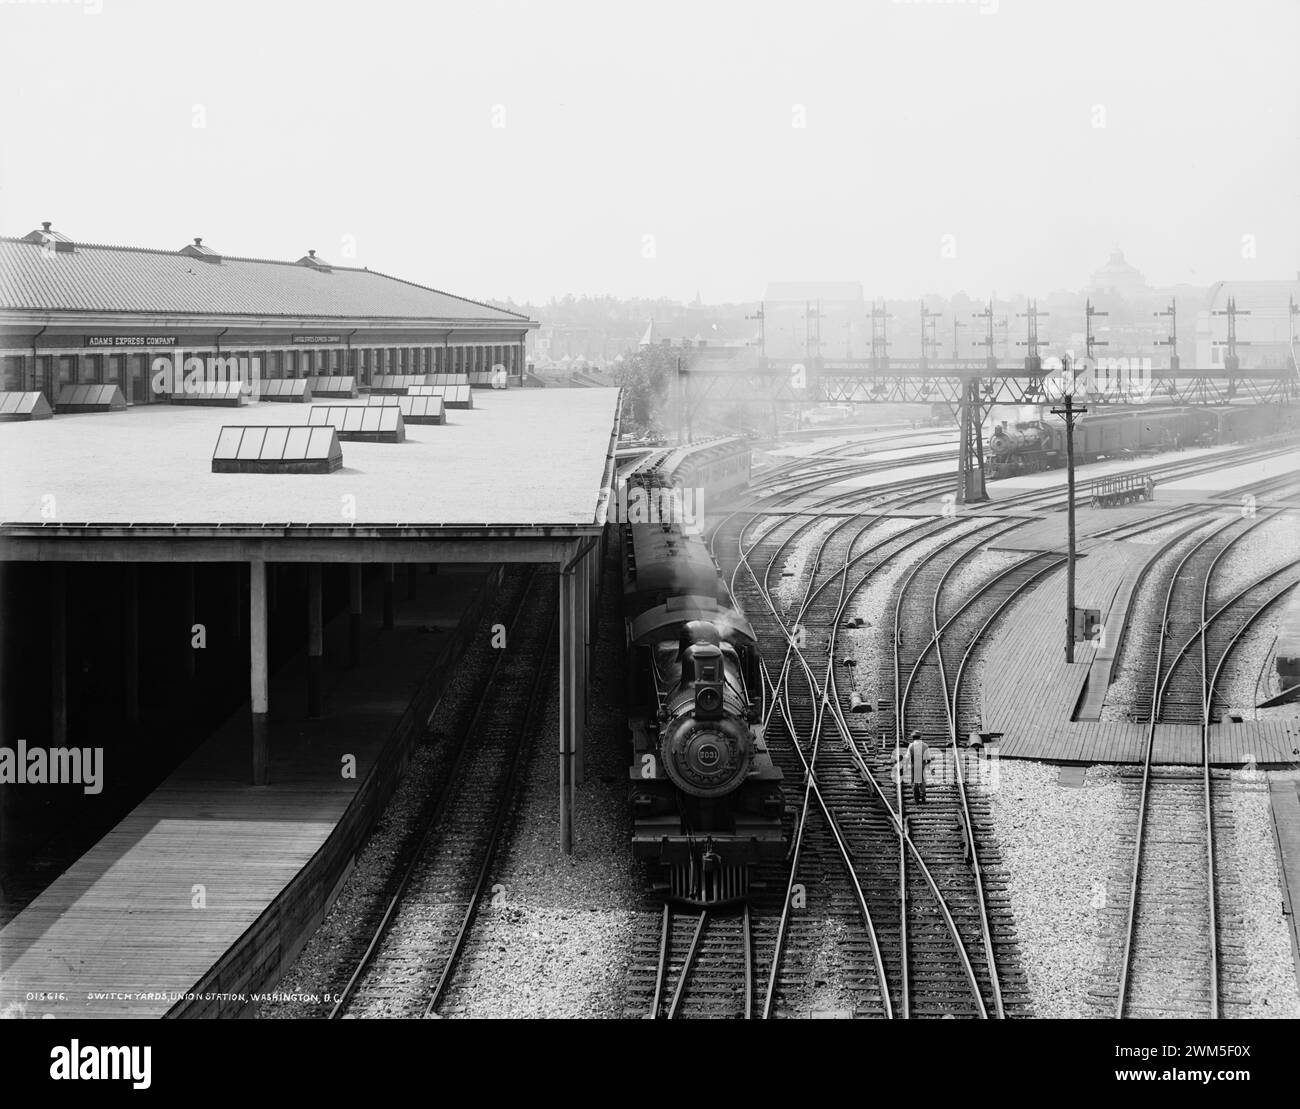 Switch Yards, Union Station, Washington D.C. - locomotiva, treno a vapore - Detroit Publ. Co CA 1908 Foto Stock